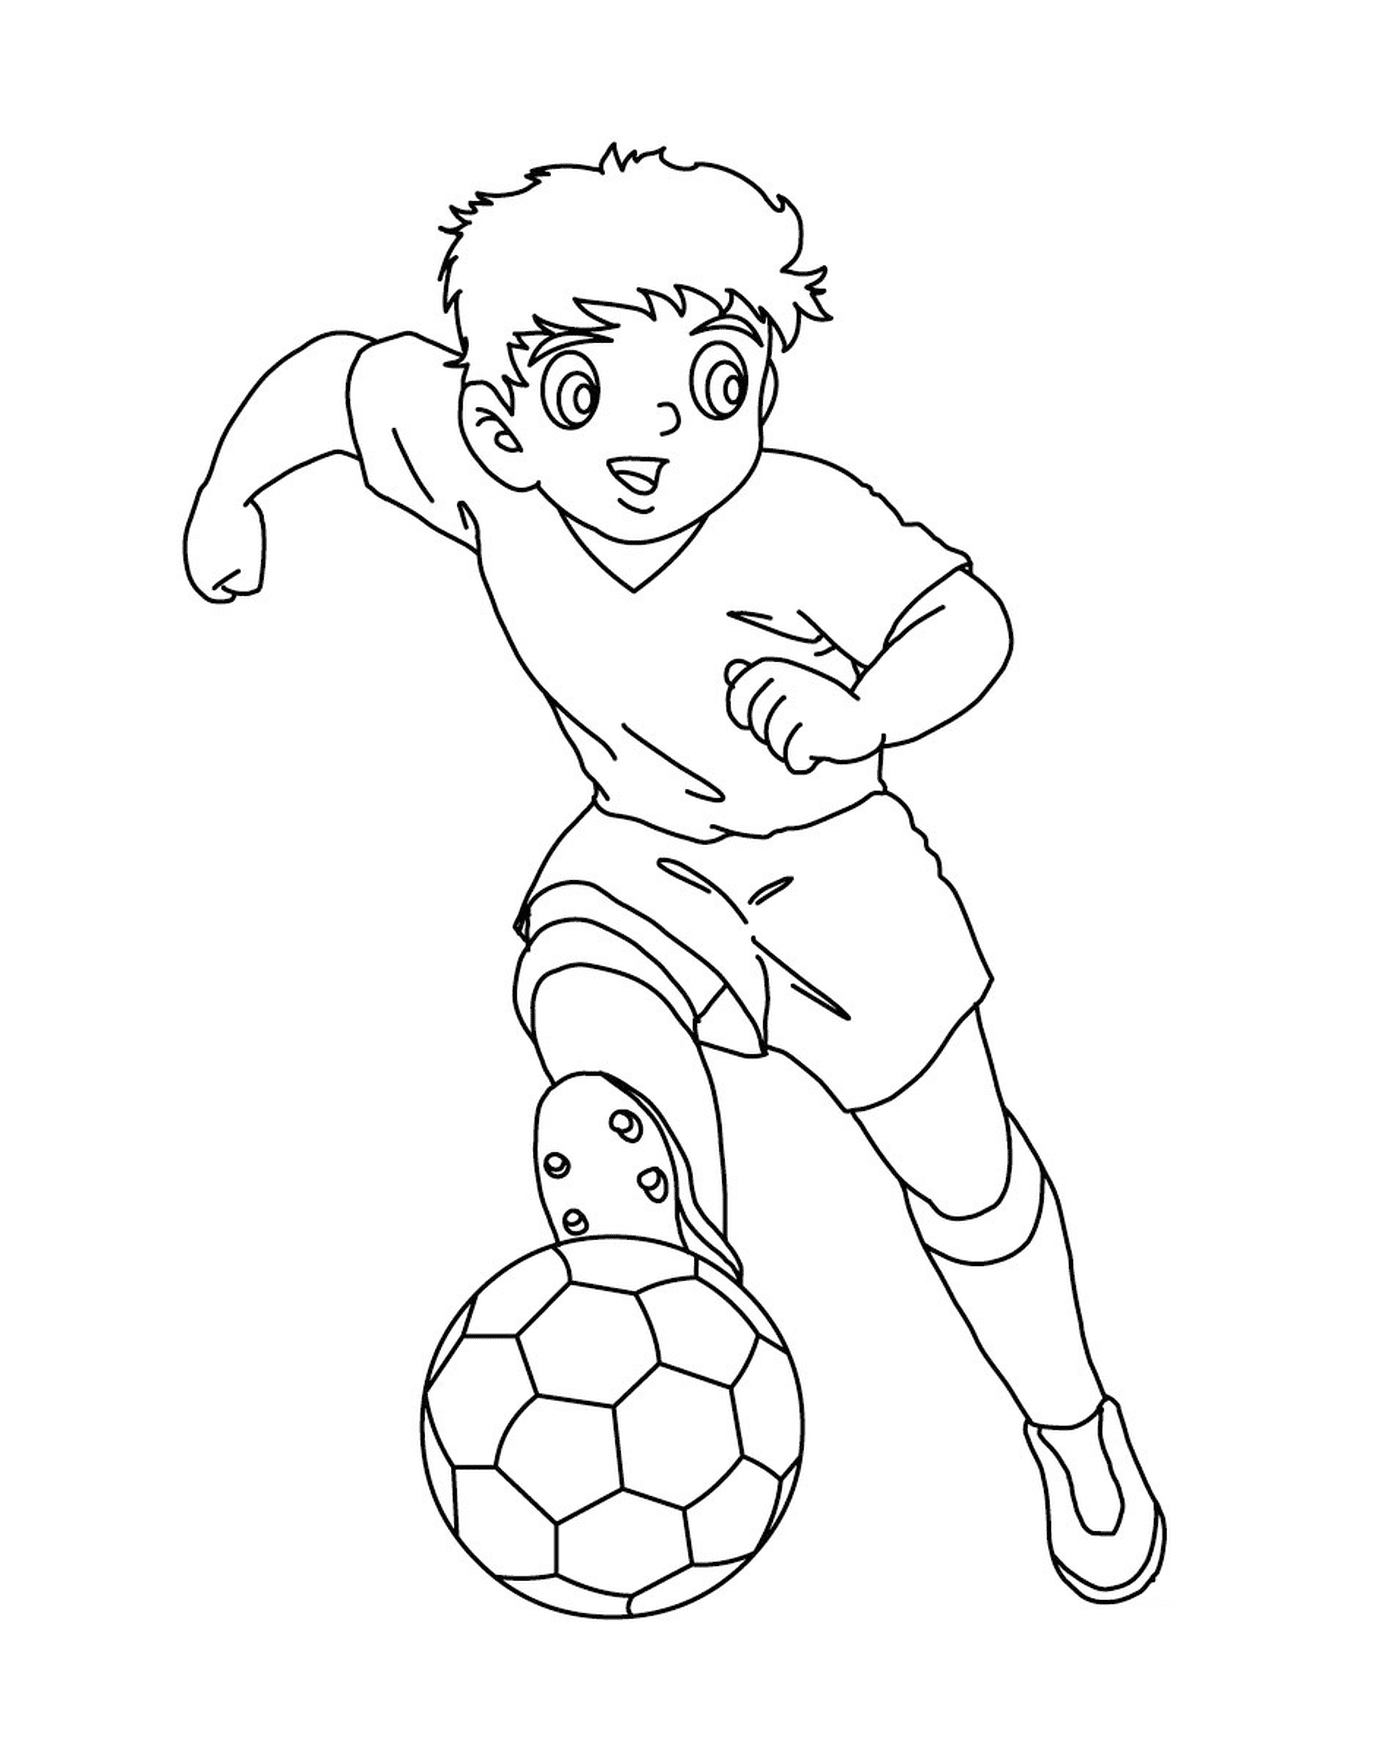  Boy playing football like Captain Tsubasa 